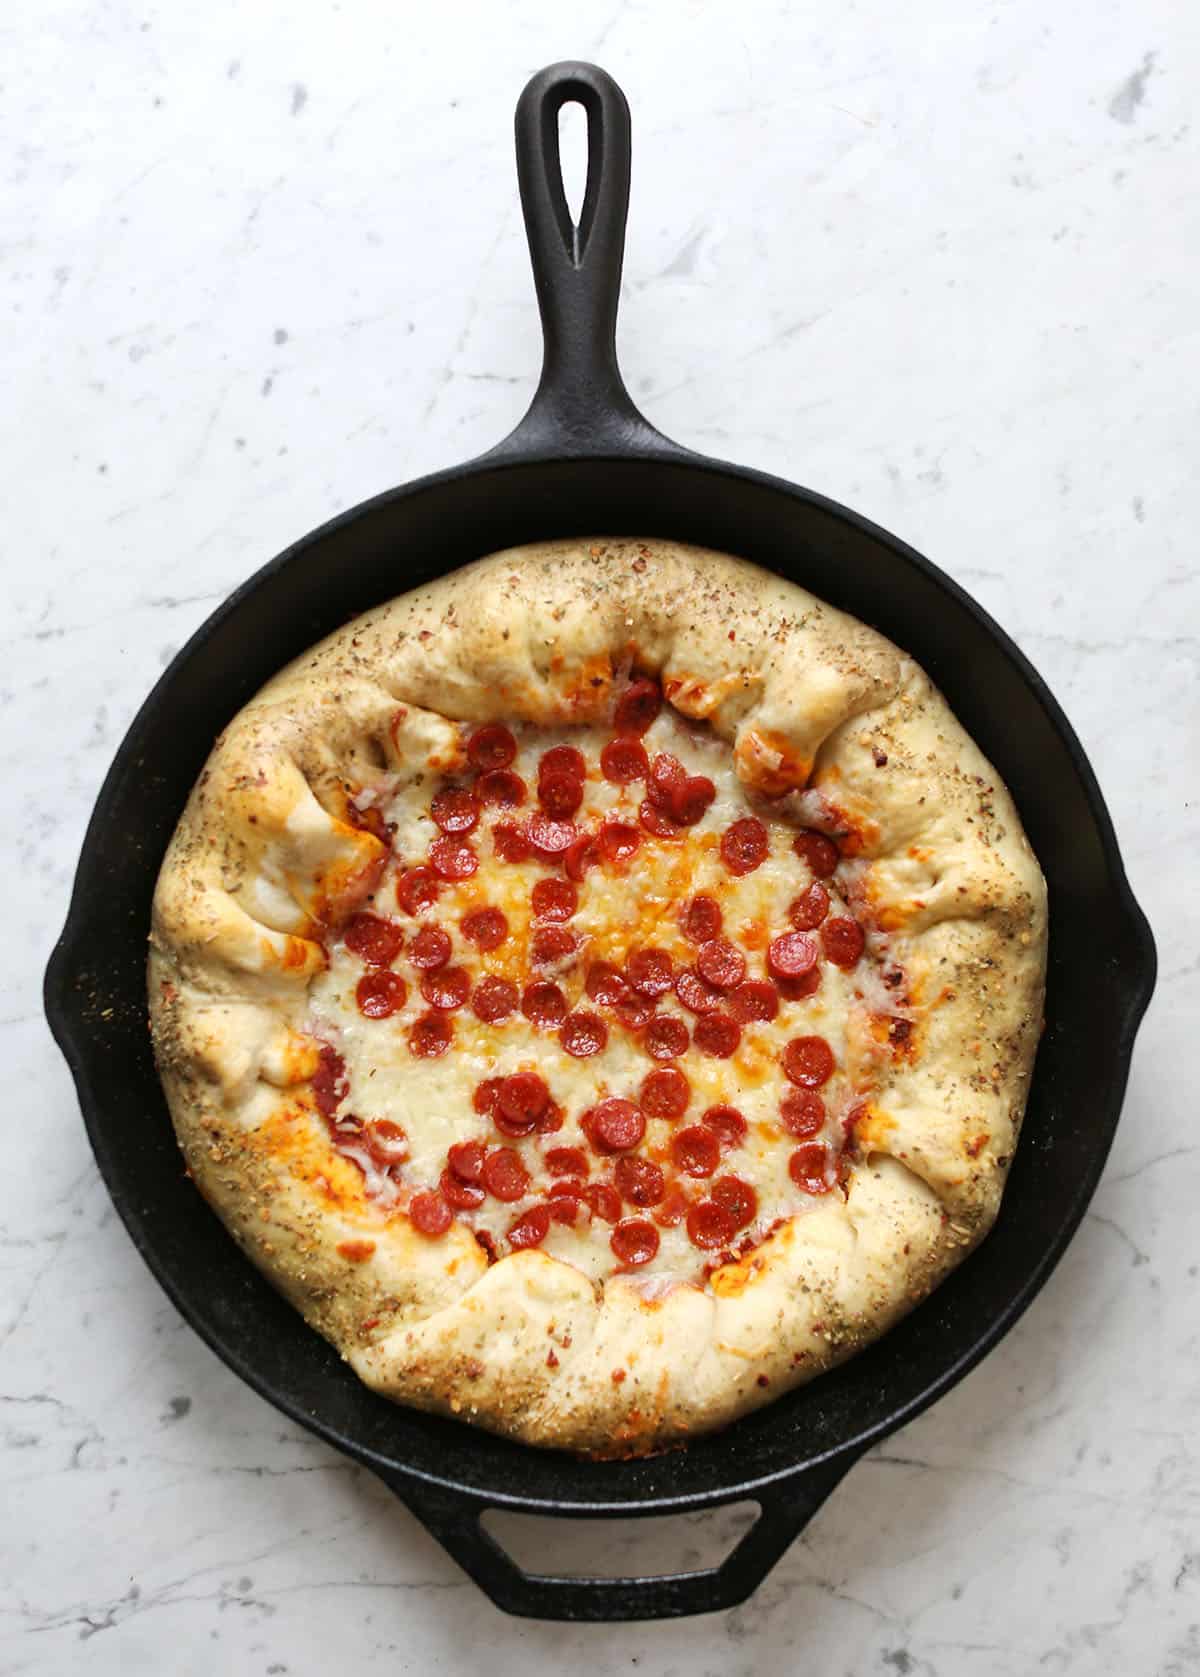 https://abeautifulmess.com/wp-content/uploads/2013/03/deep-dish-cast-iron-pizza-.jpg